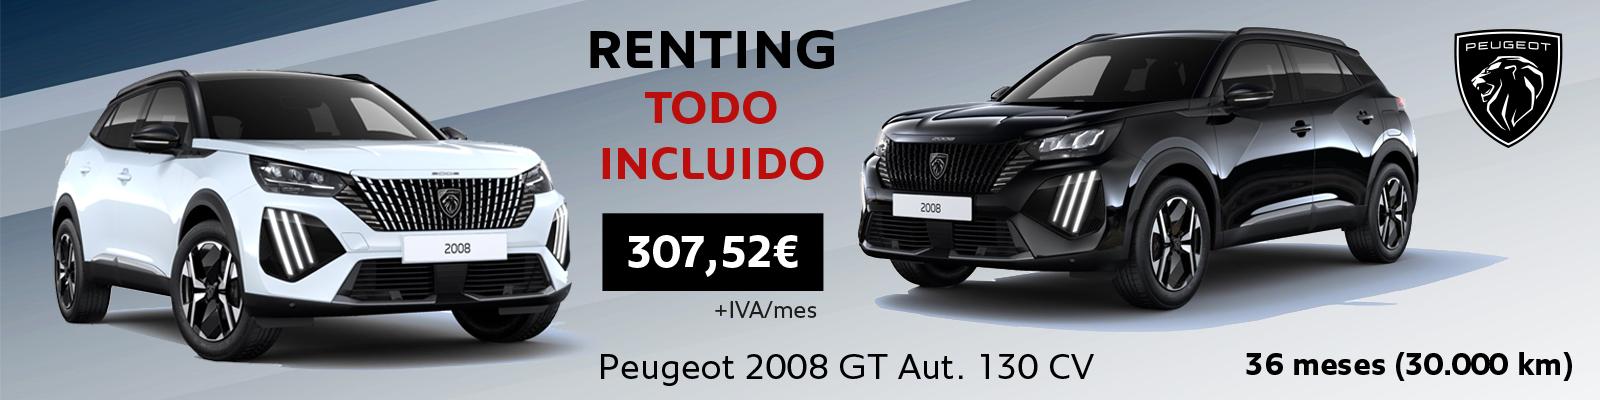 Renting TODO INCLUIDO Peugeot 2008 GT Aut. 307,52€/mes* + IVA